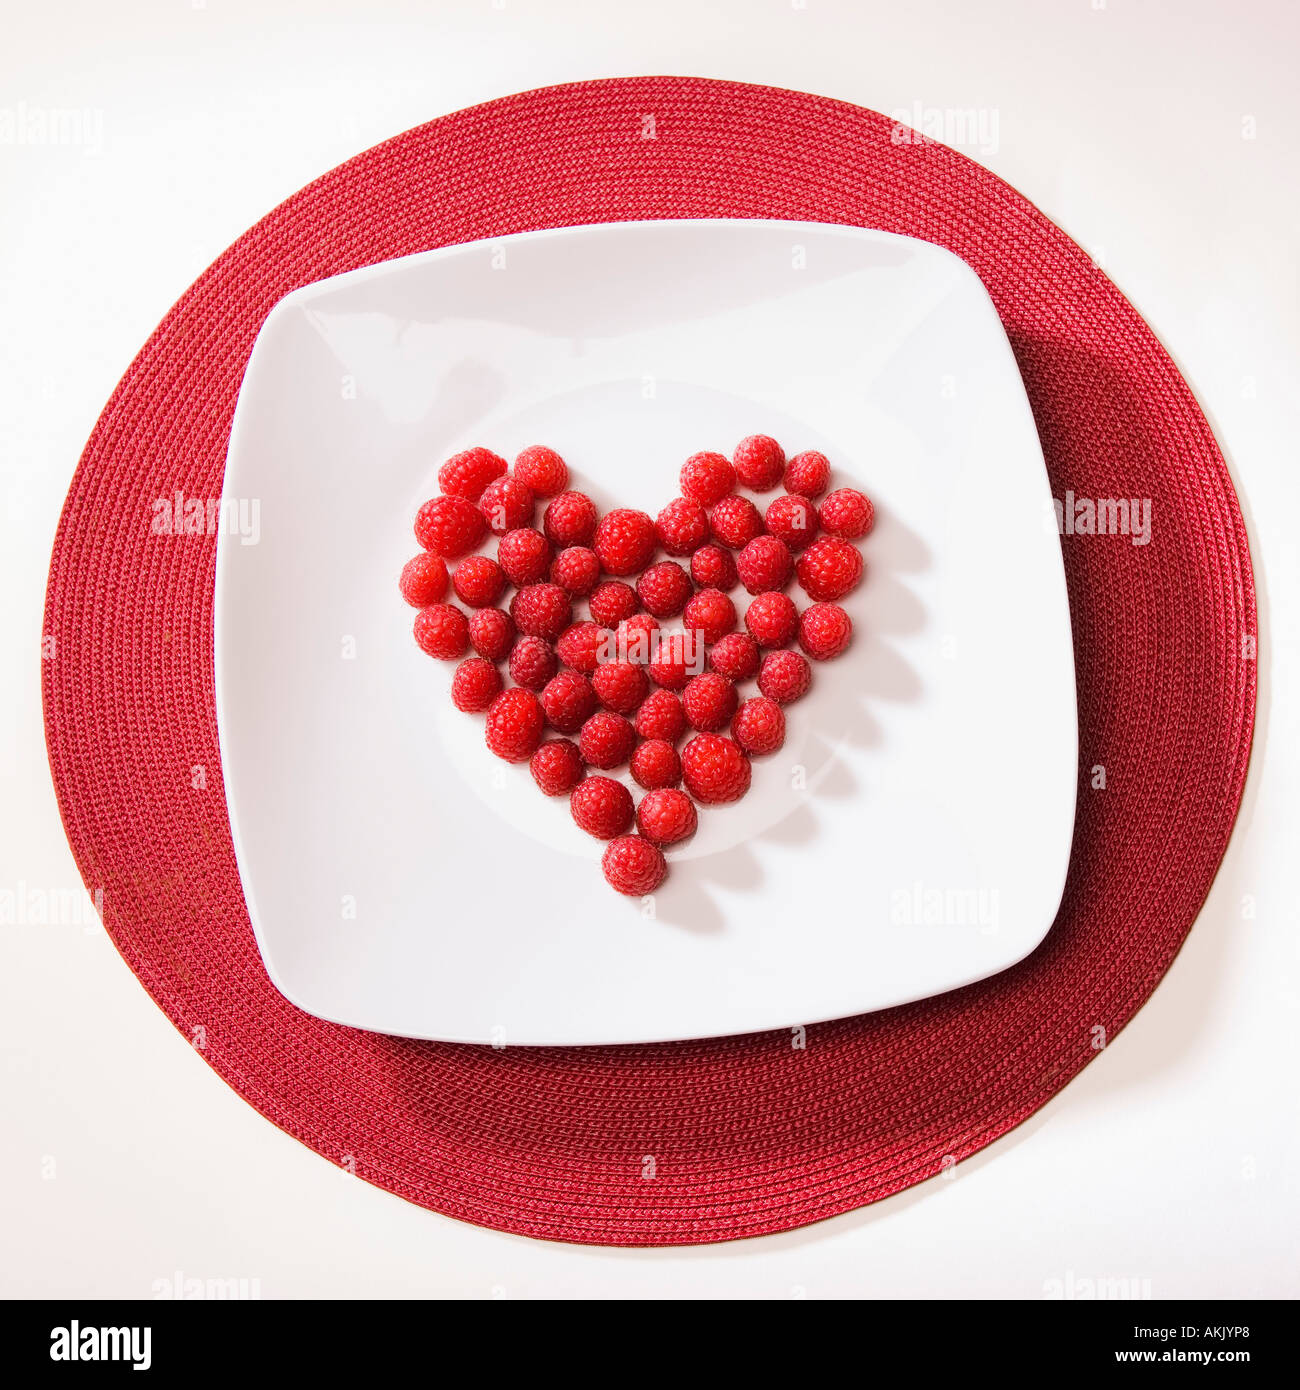 Raspberries arranged in heart shape Stock Photo